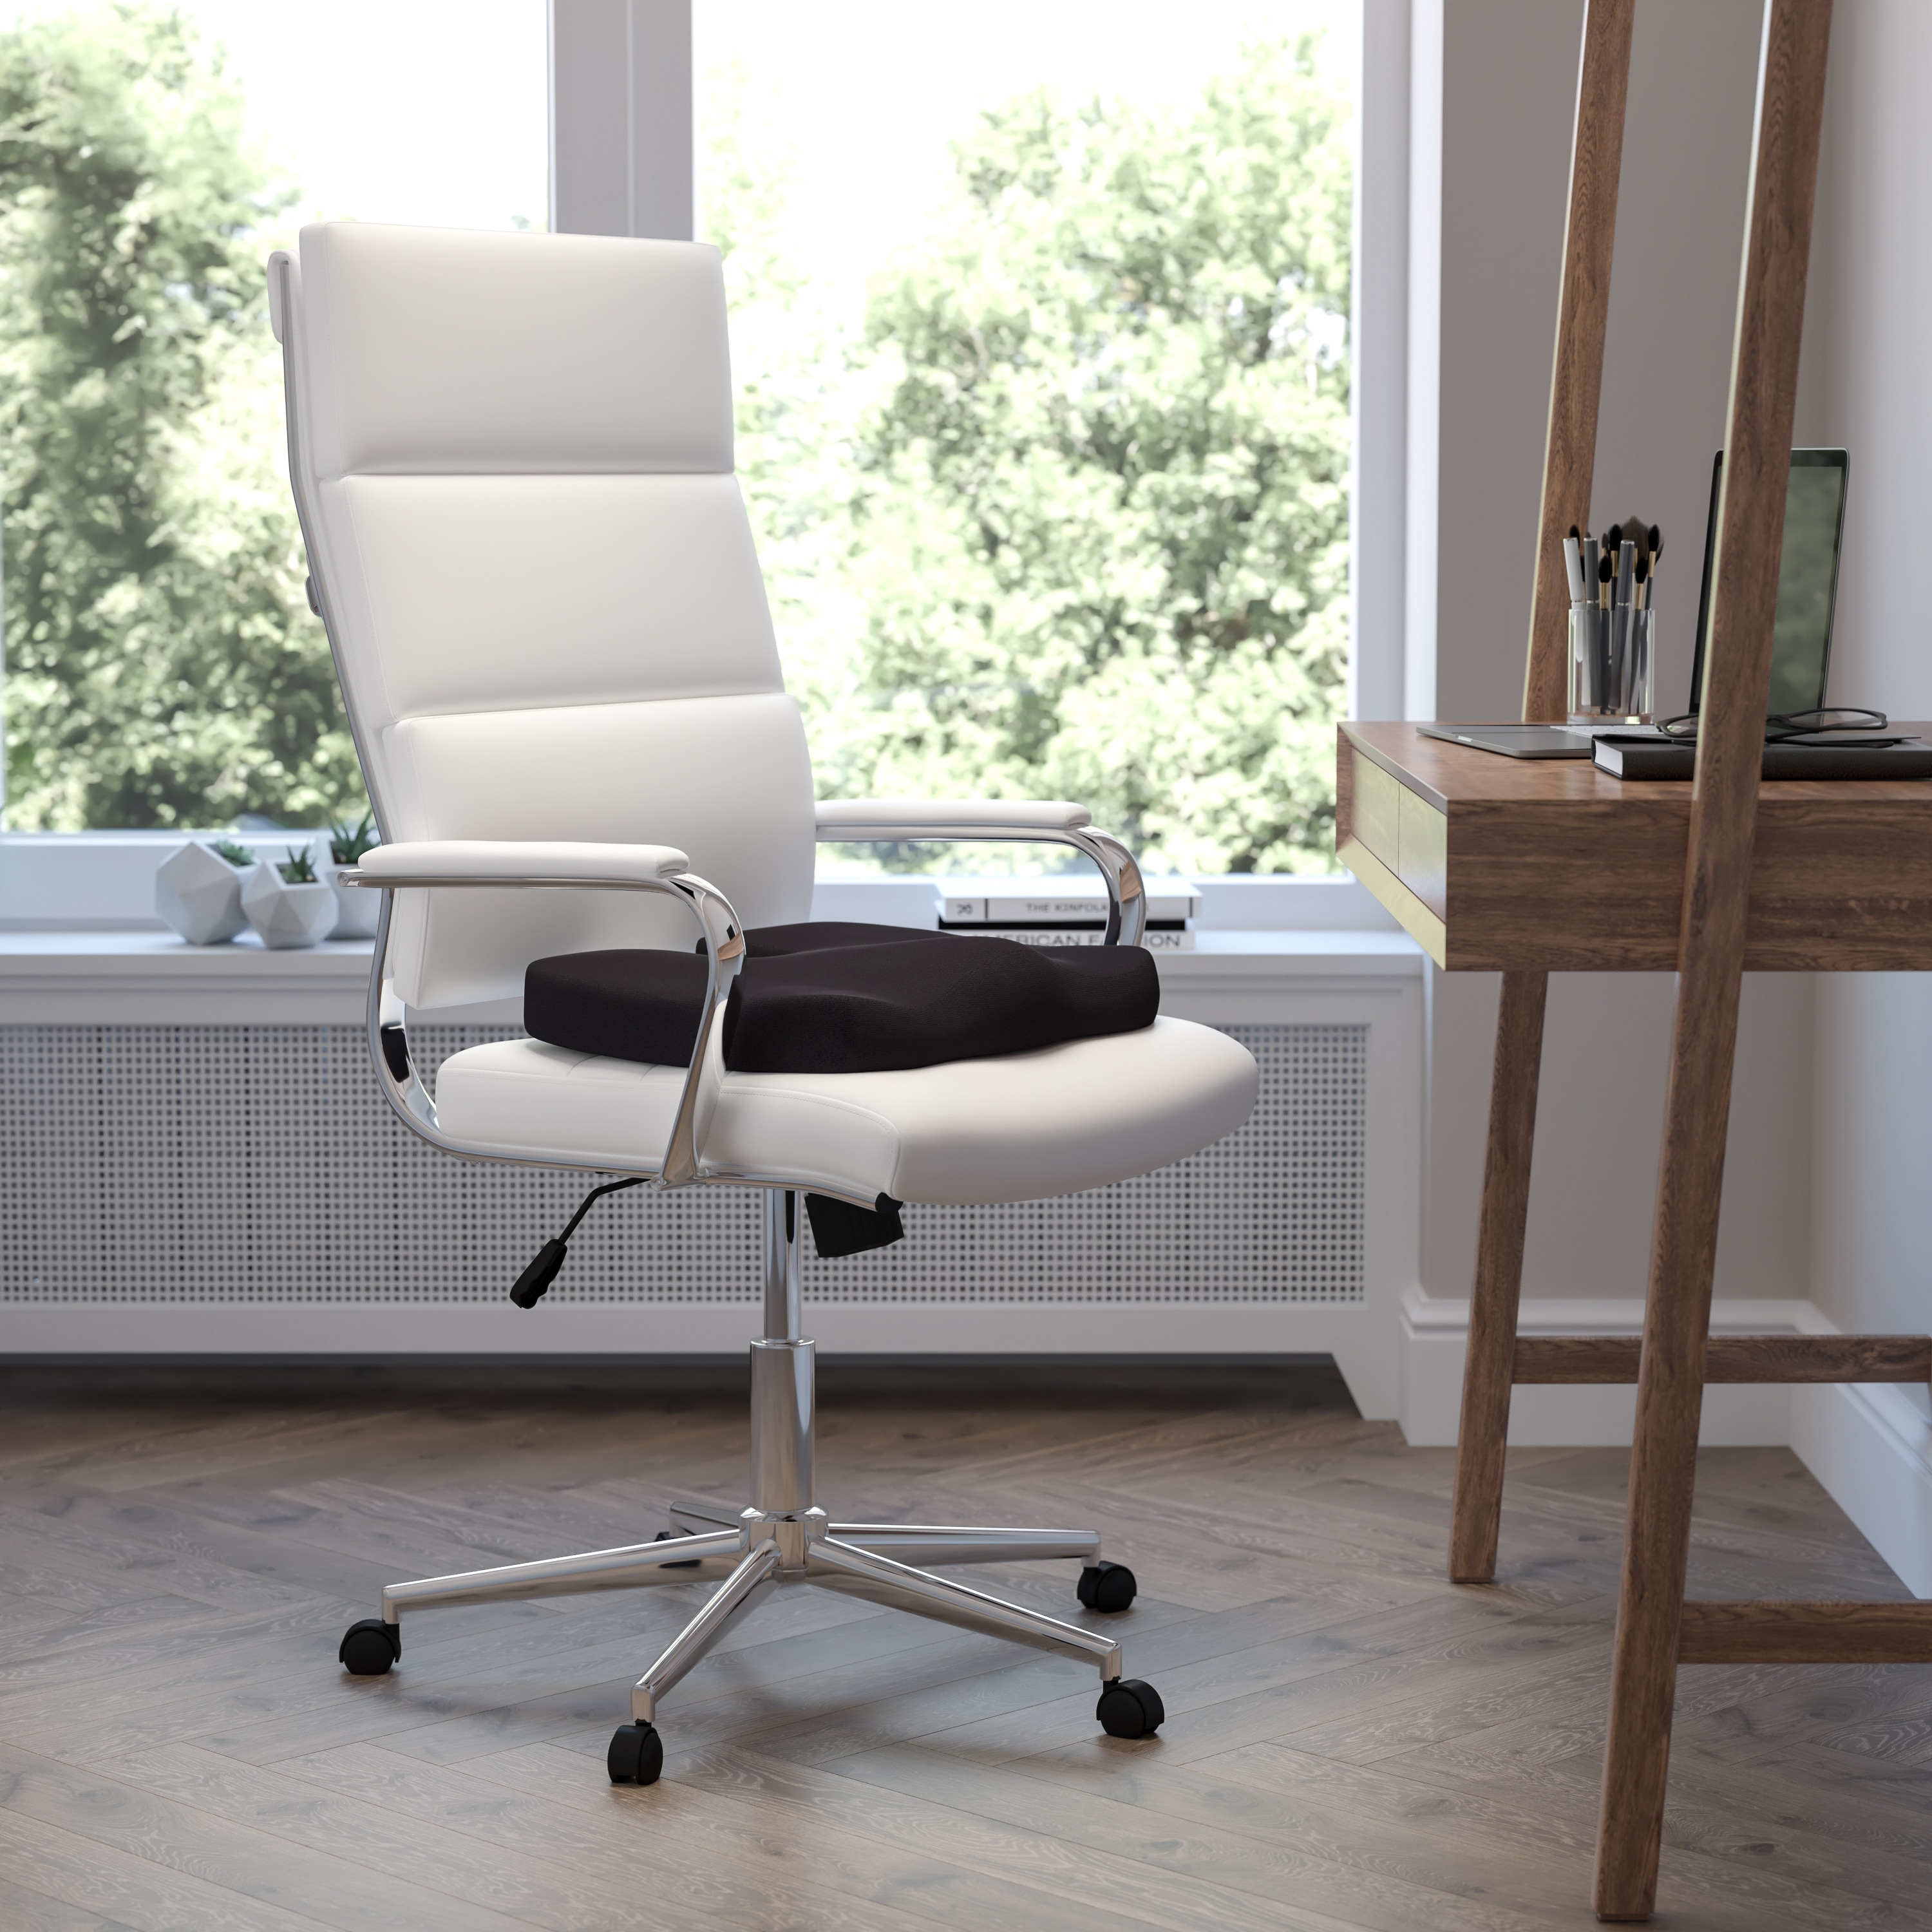 Contoured Office Chair Cushion Memory Foam - Black